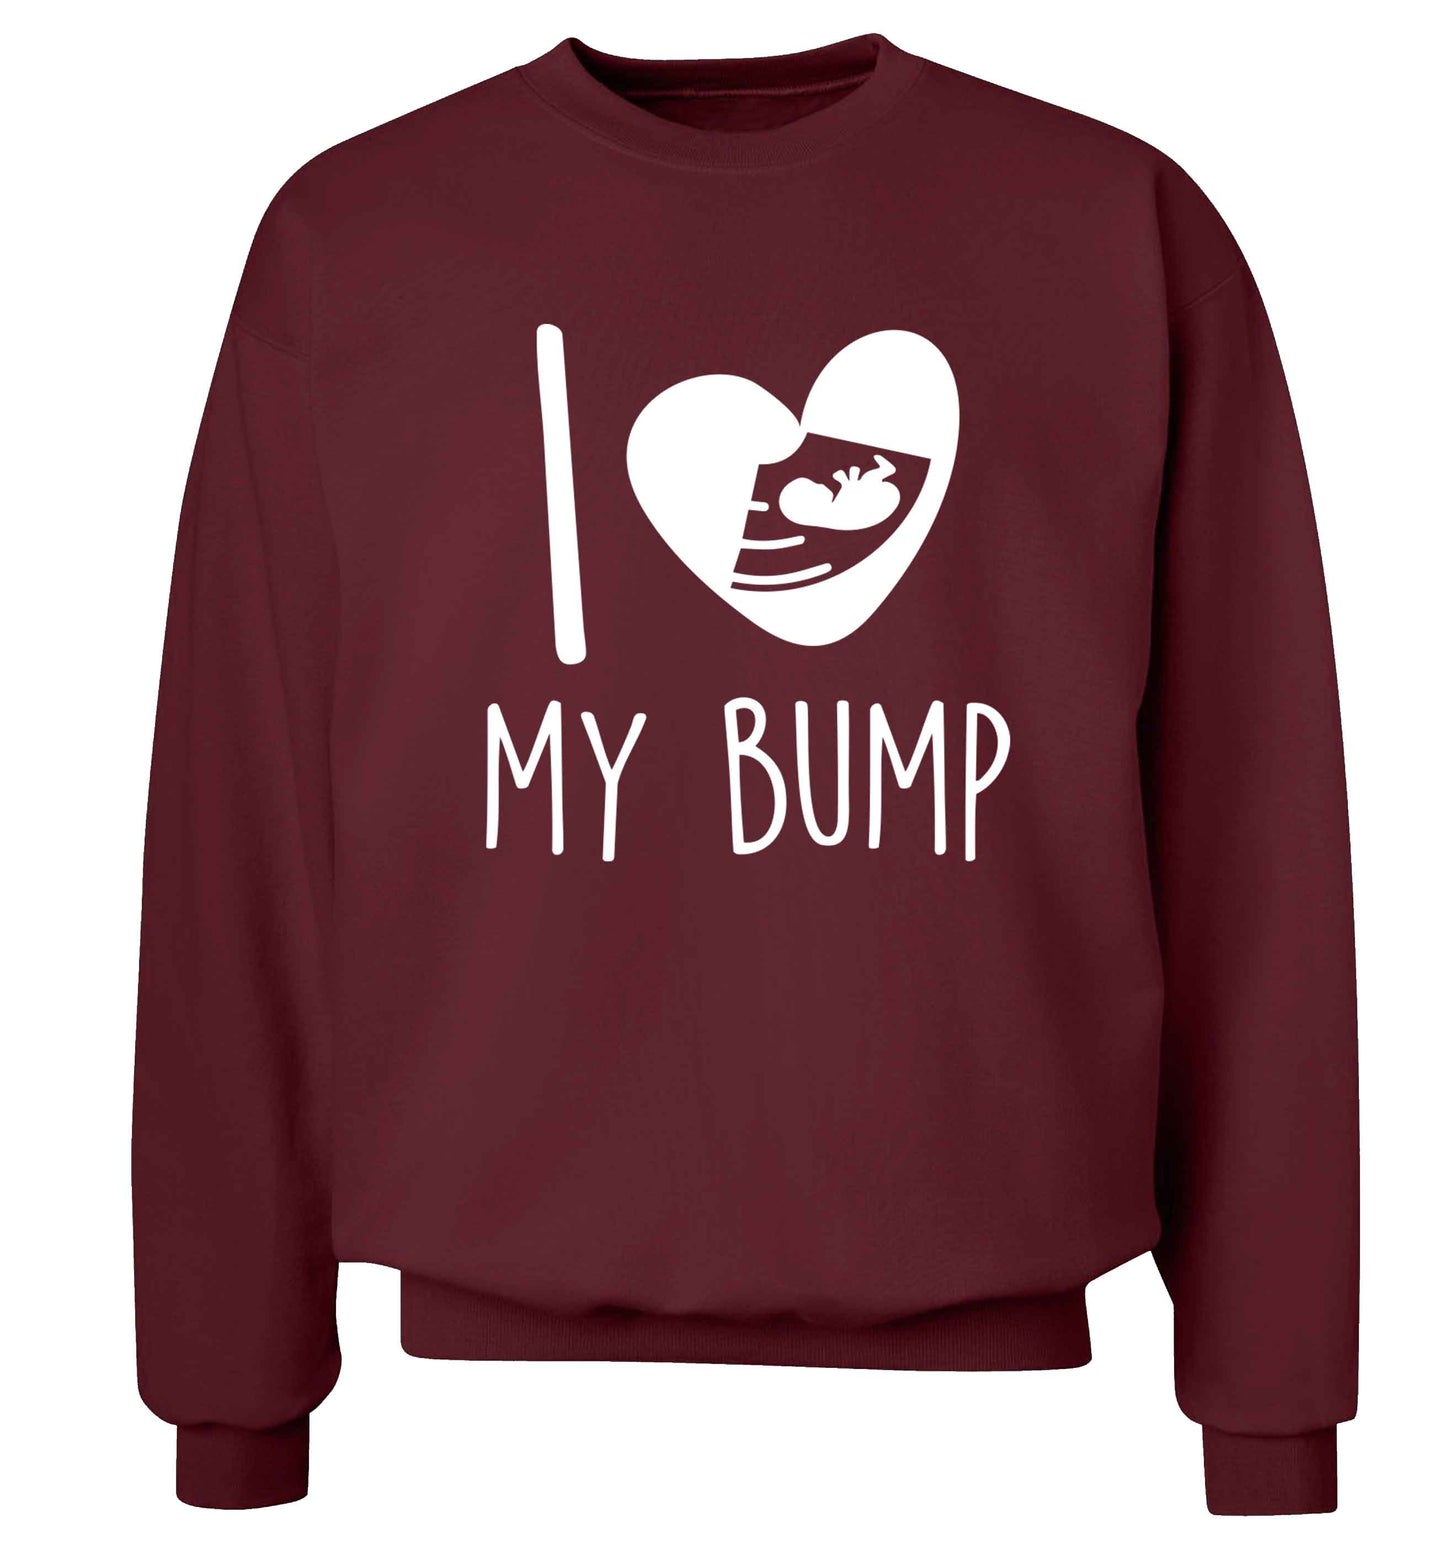 I love my bump Adult's unisex maroon Sweater 2XL